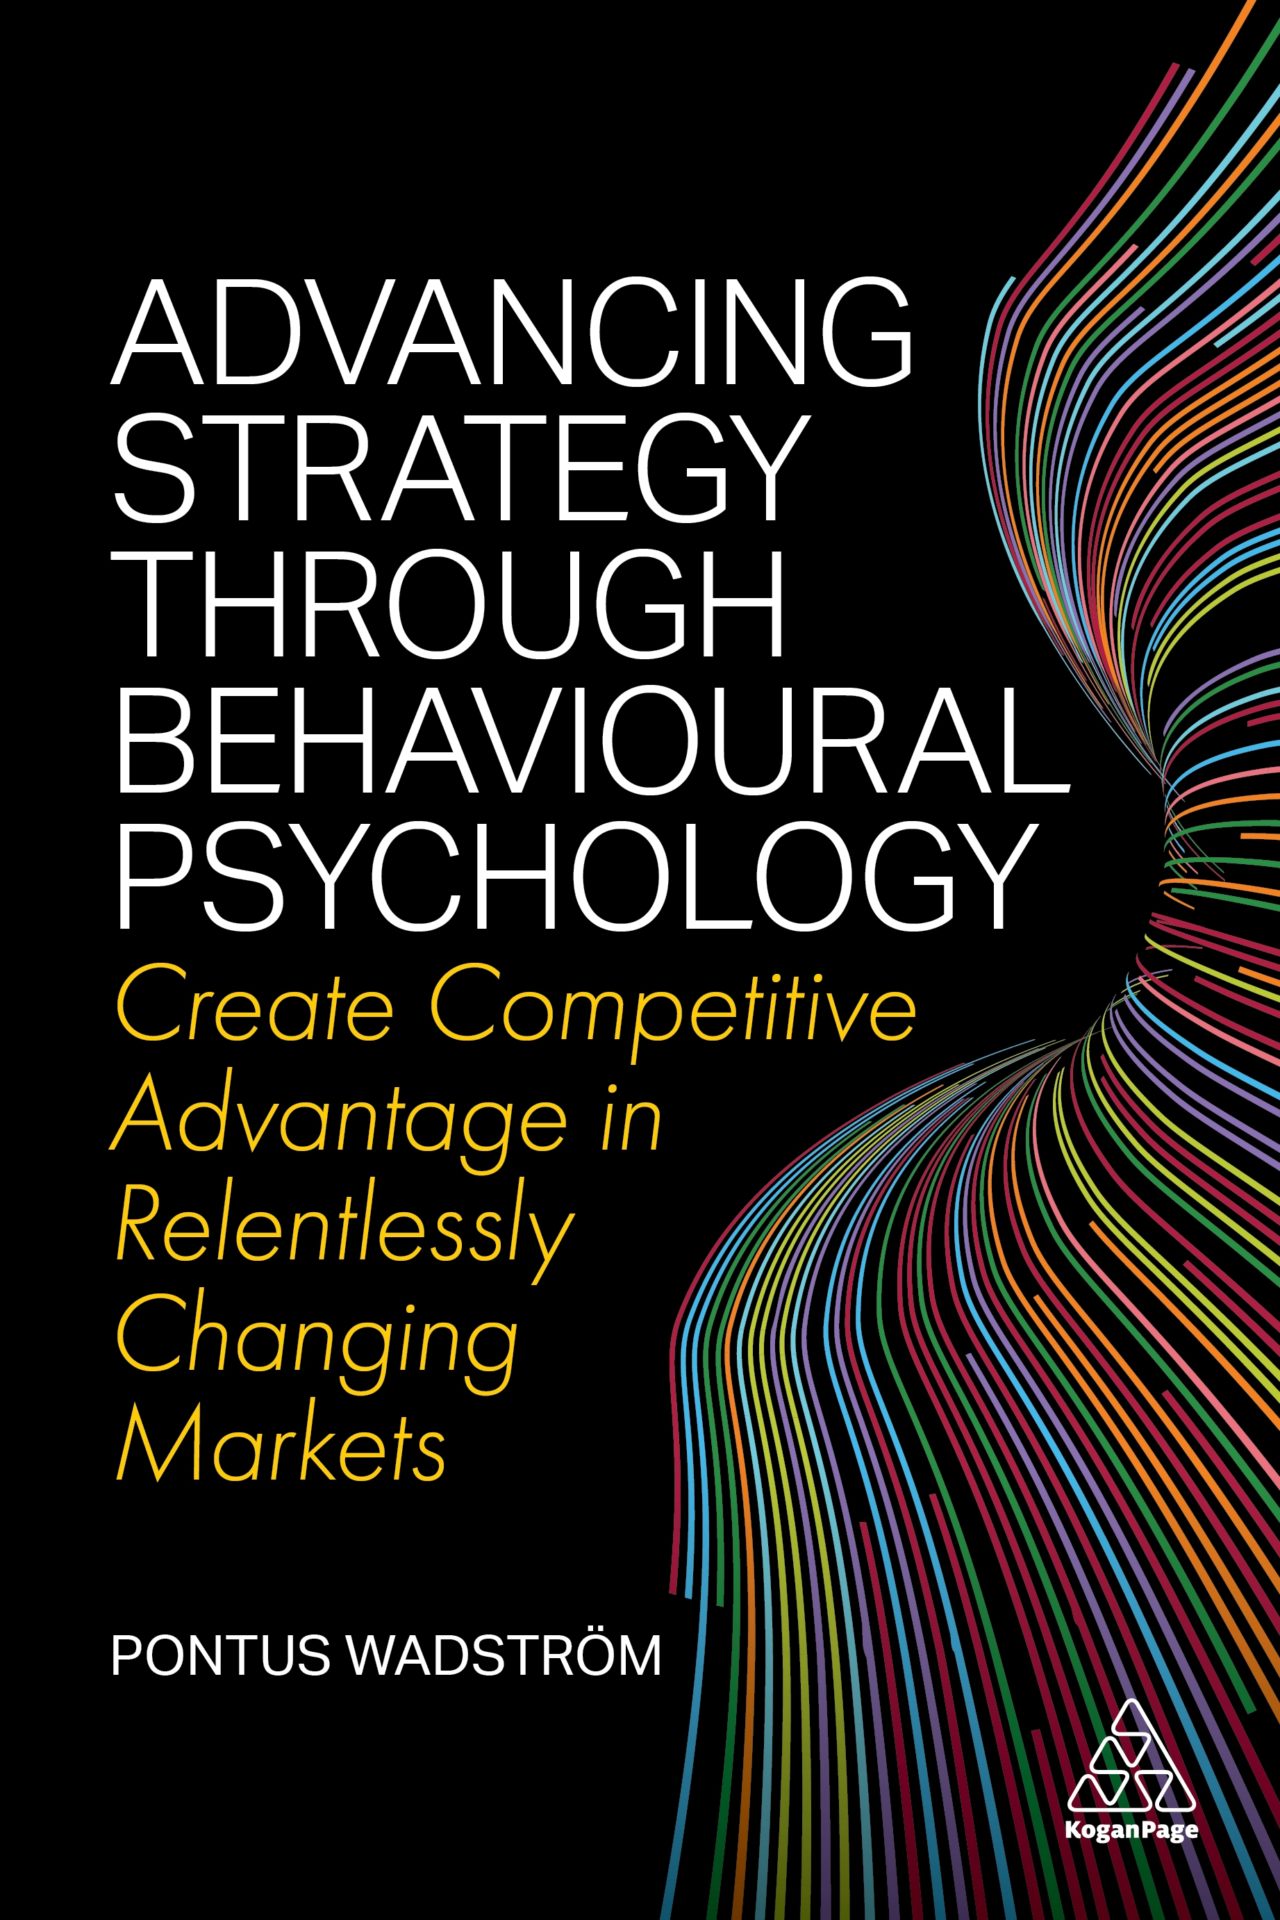 AMBA Book Club: Advancing Strategy through Behavioural Psychology